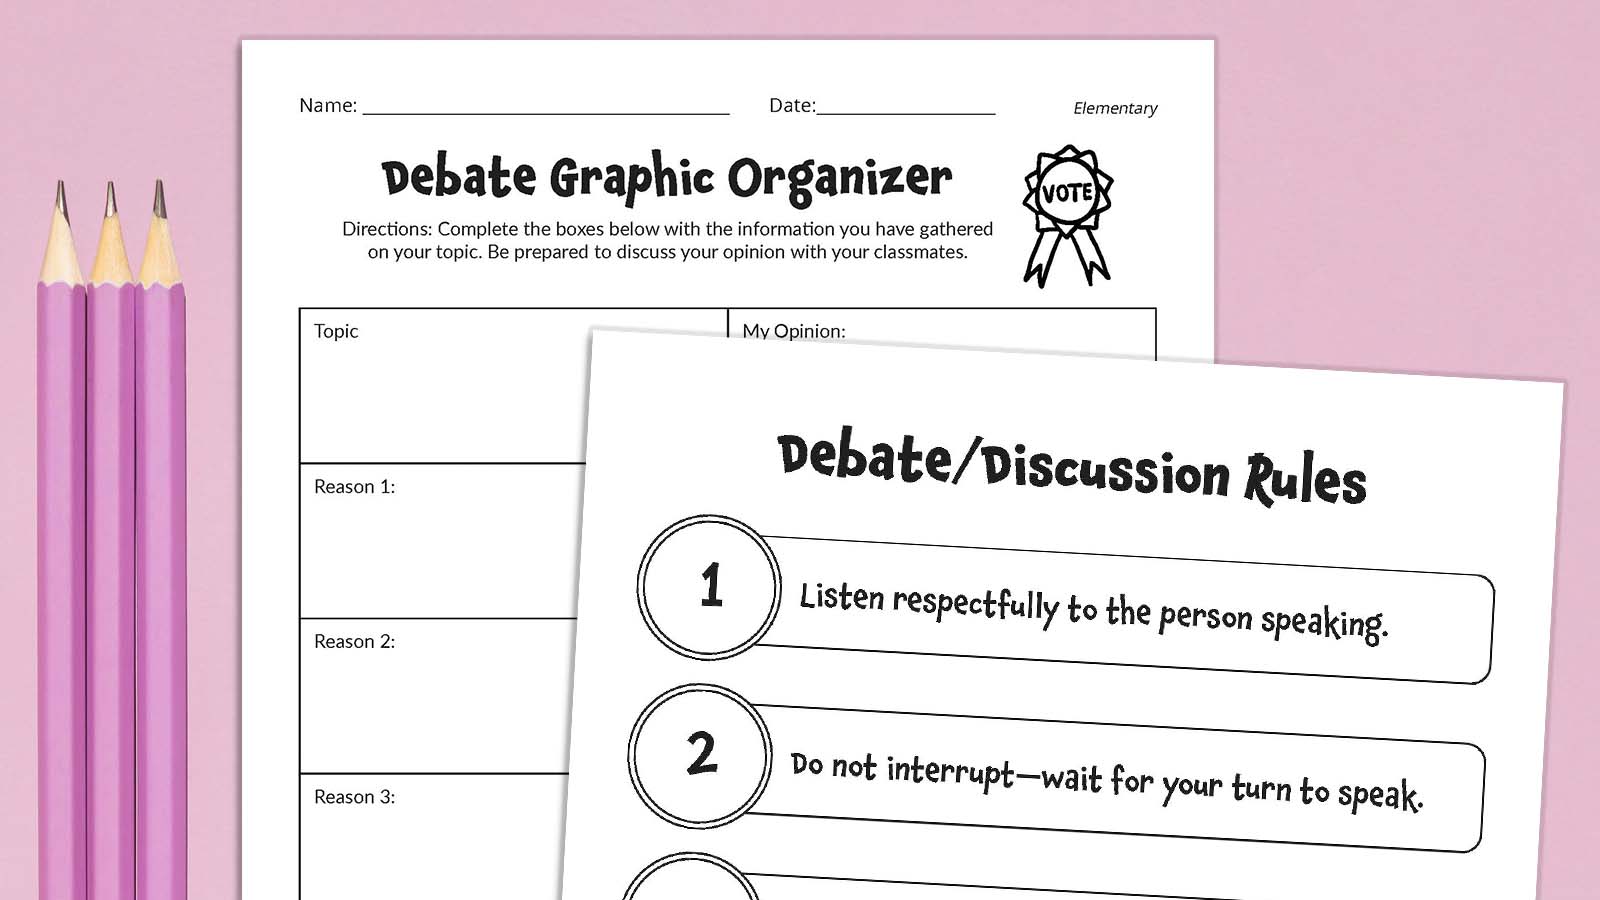 Image of the debate graphic organizer and debate rules